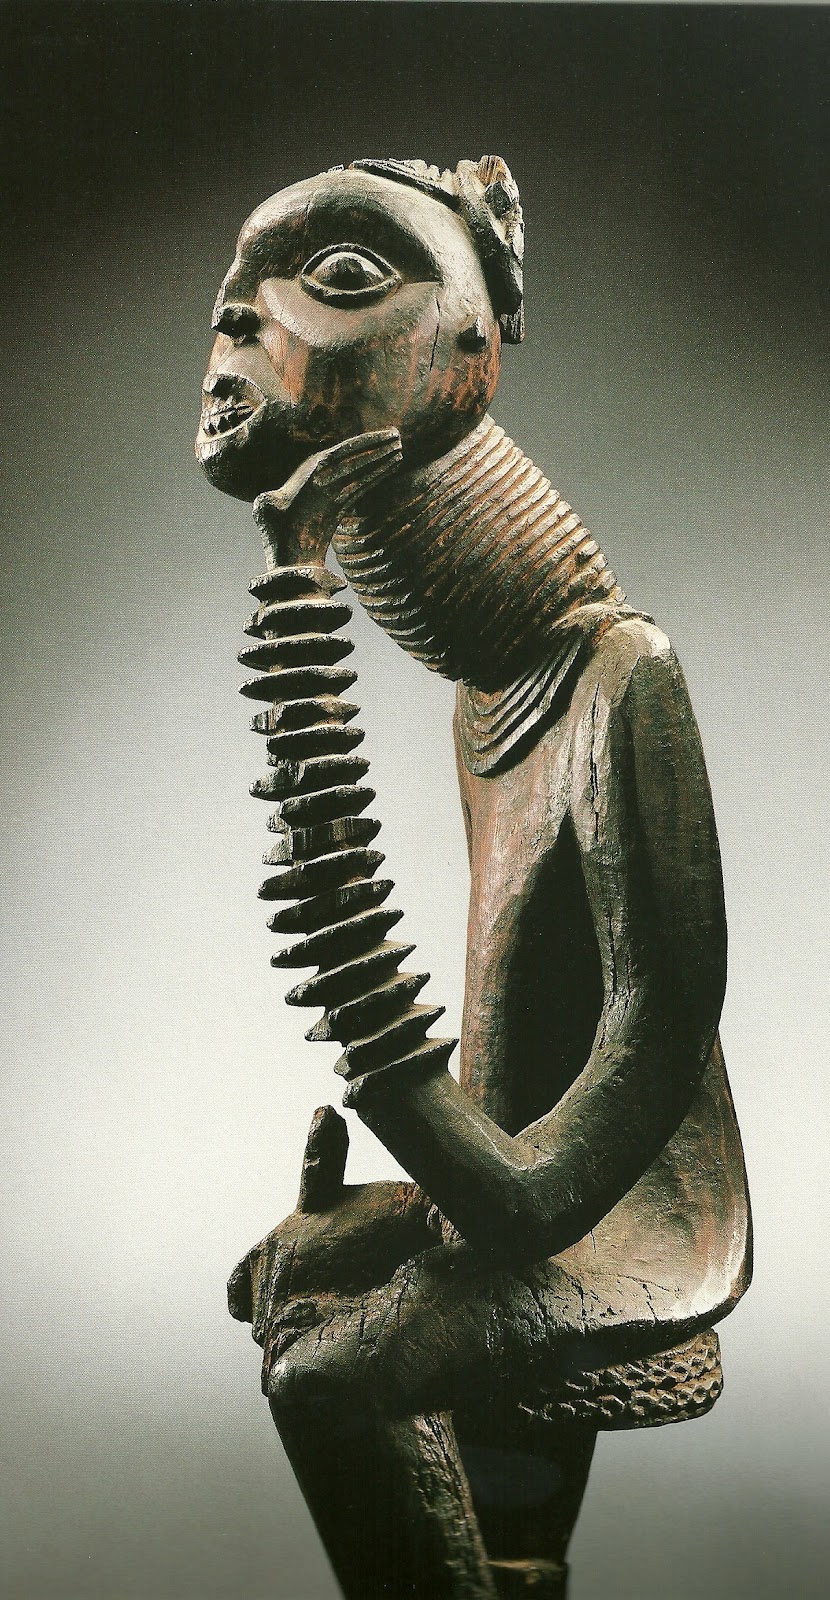 File:Stargazer Figurine - Kilia-type - Museum of 